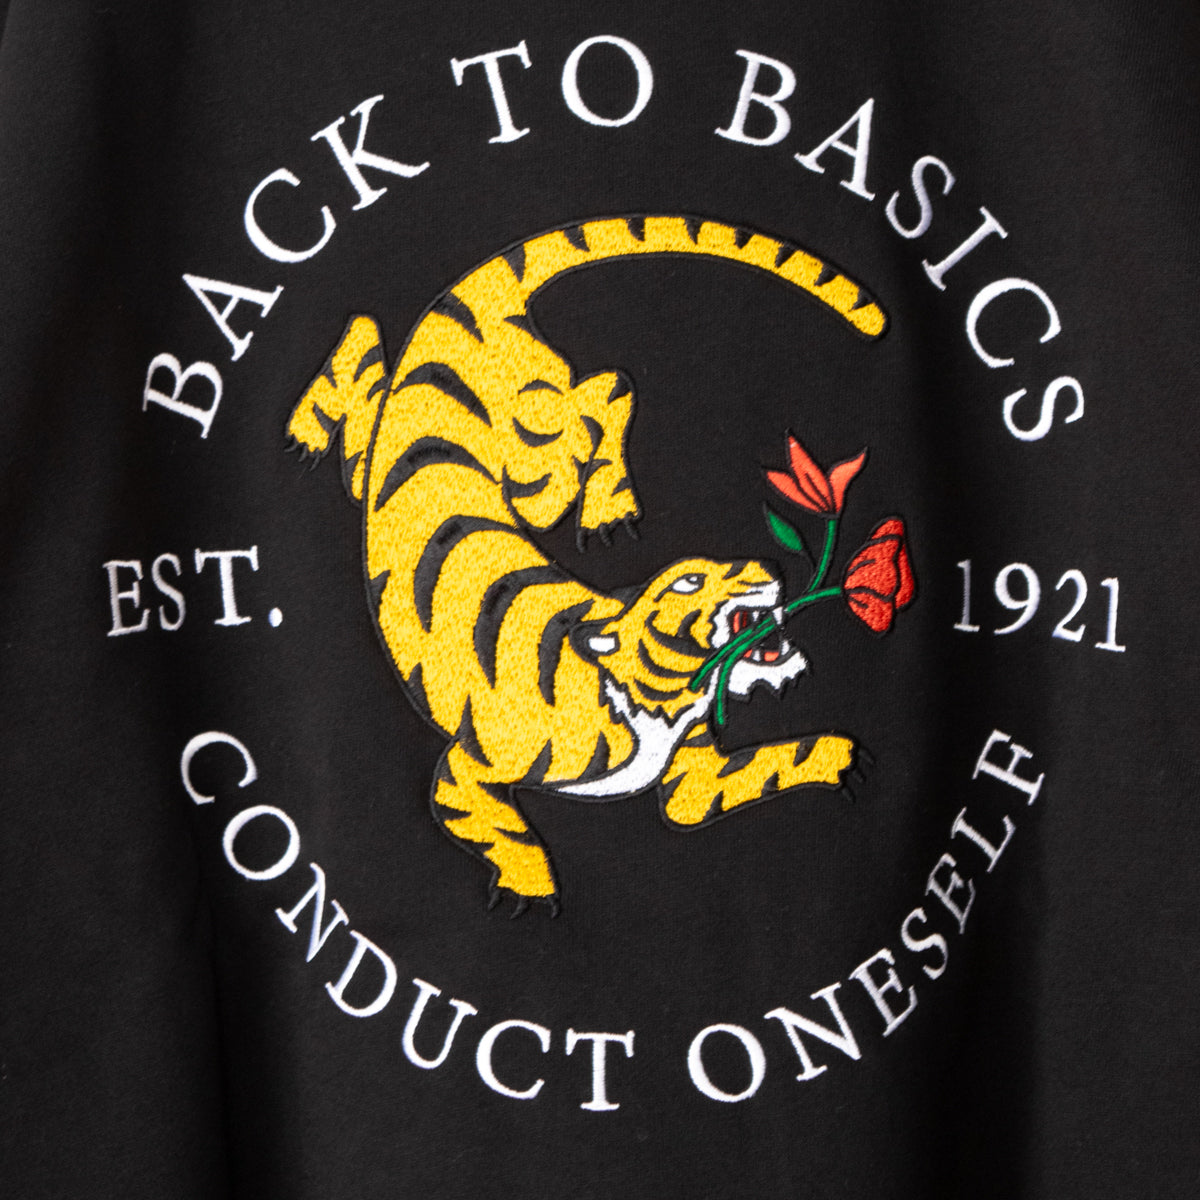 Fleece-lined Tiger Embroidery Sweatshirt BLACK